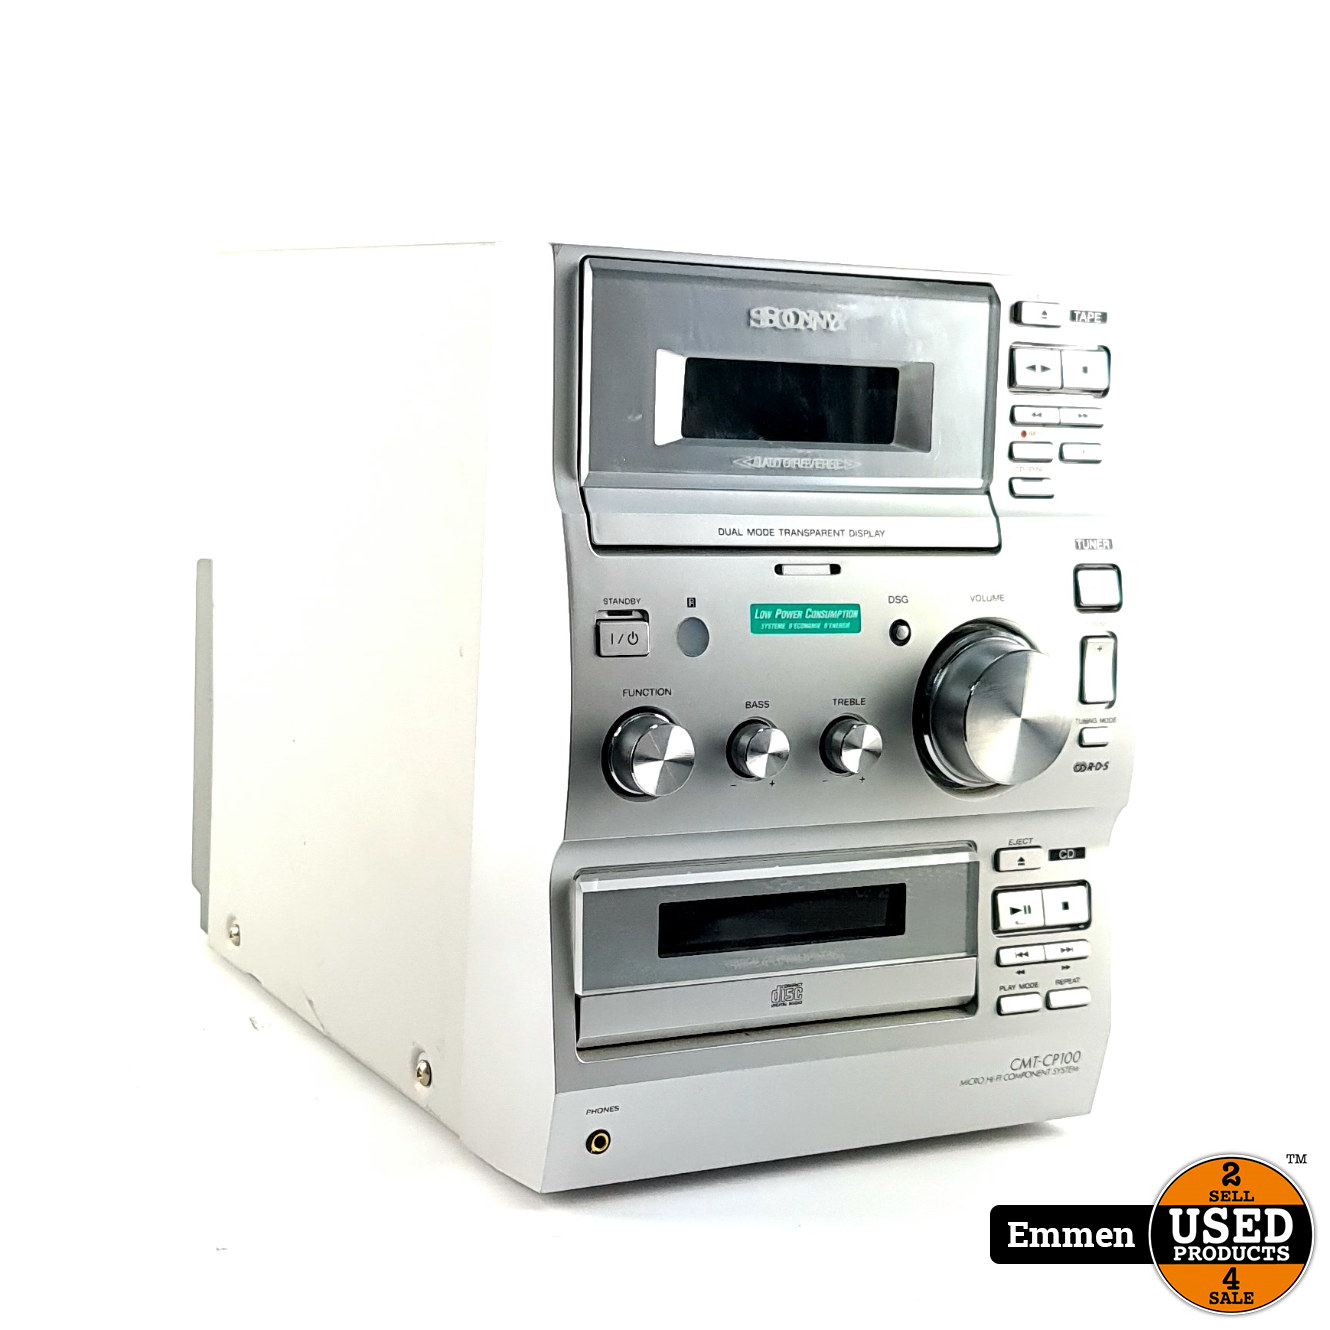 eiland hengel alarm Sony Cmt-cp100 CD Speler, Tuner &amp; Cassette Zilver | In Nette Staat -  Used Products Emmen